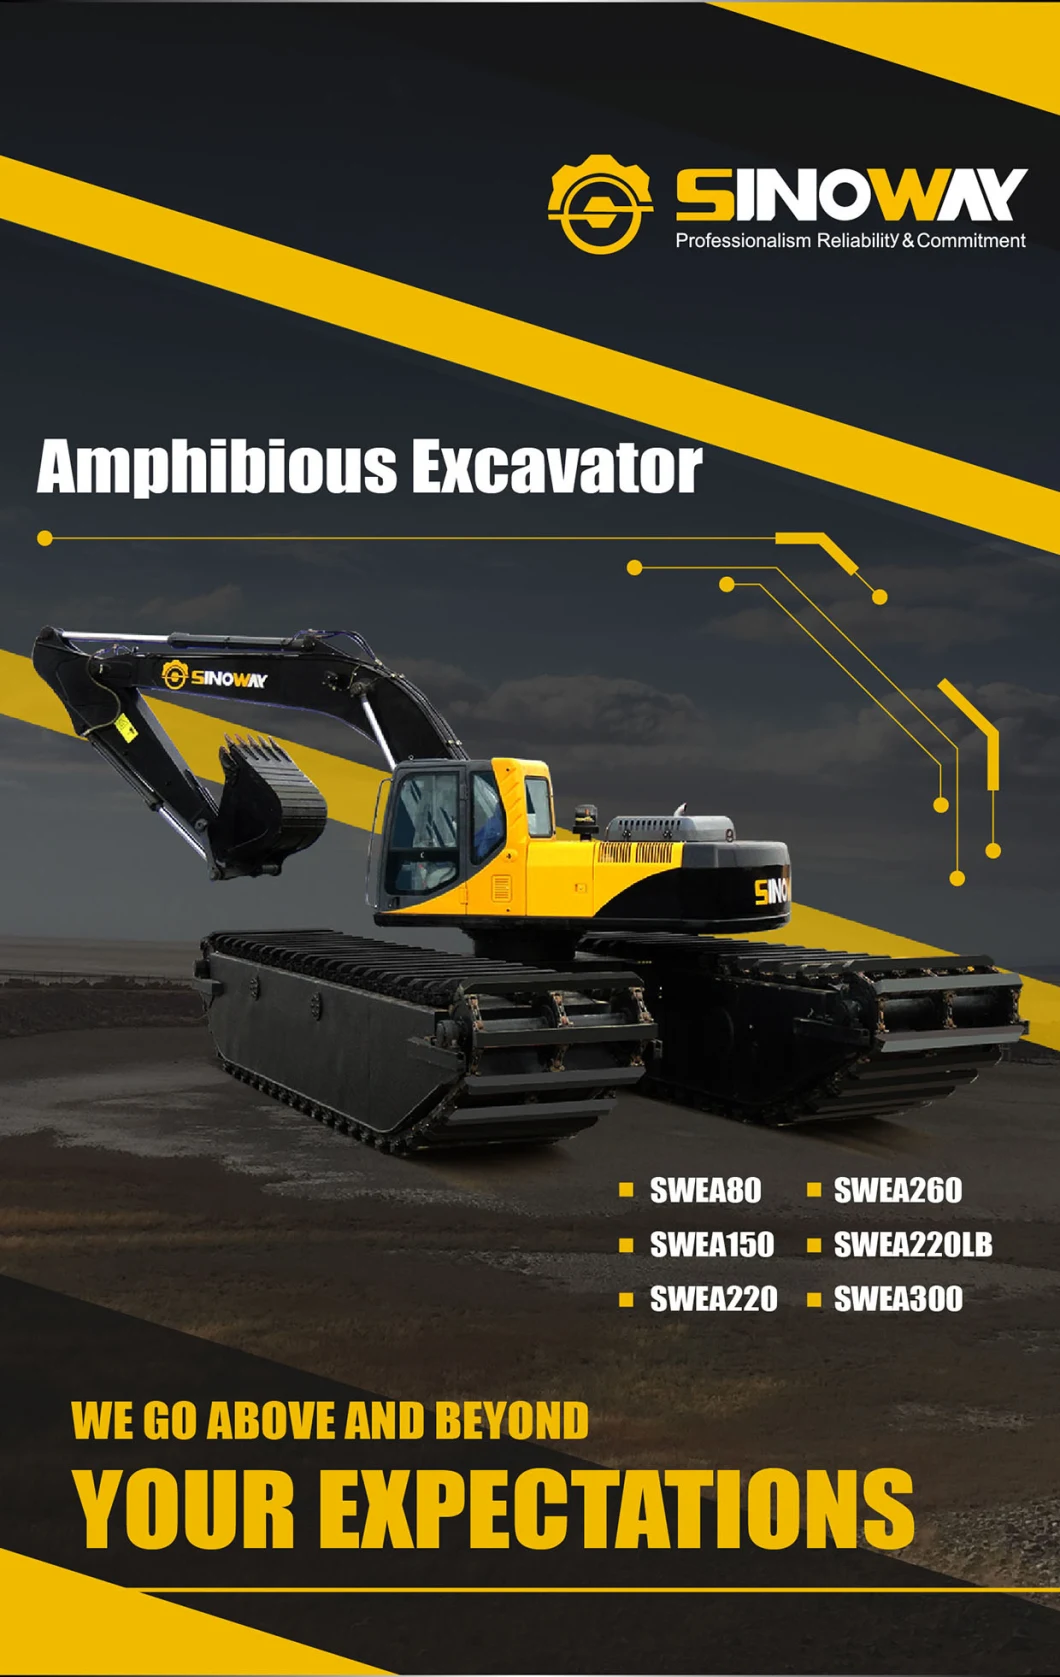 Customized Amphibious Excavator Sinoway Floating Excavator